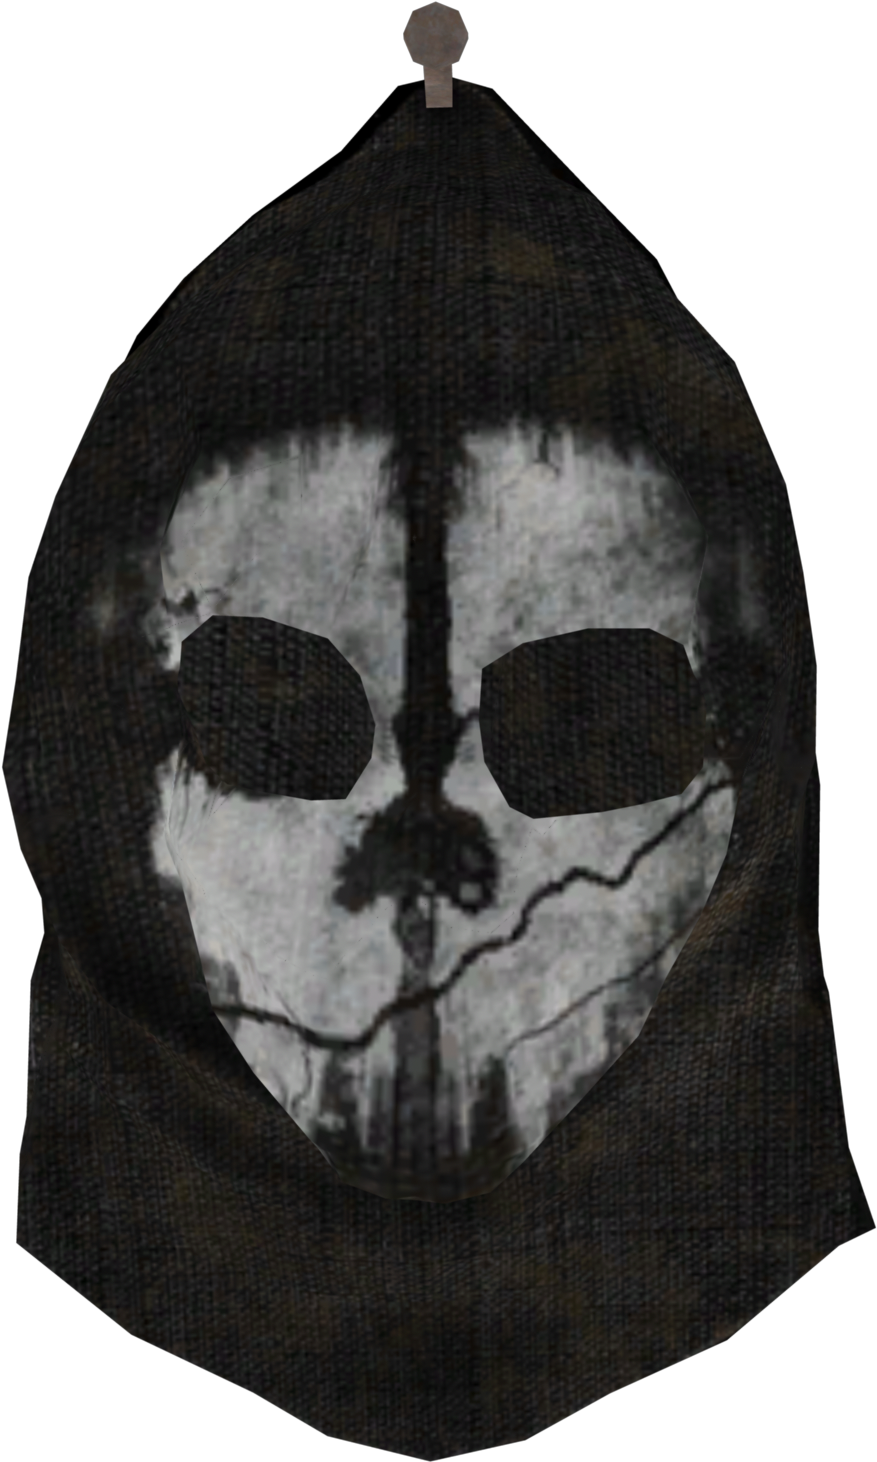 Callof Duty Ghost Mask PNG image